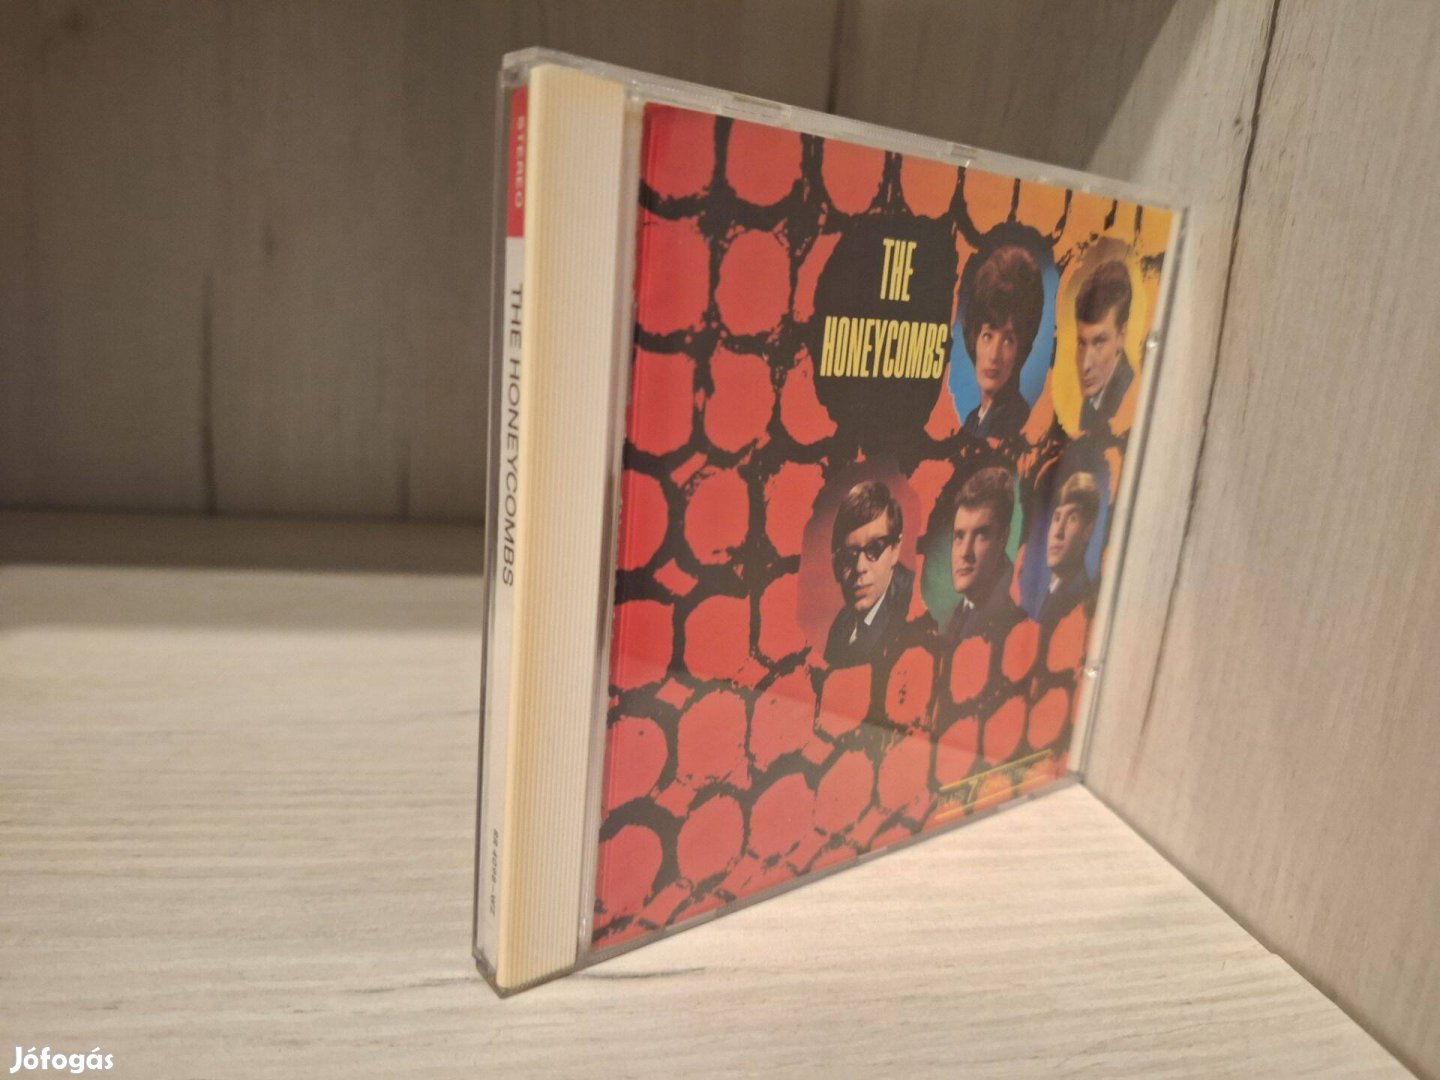 The Honeycombs - The Honeycombs CD